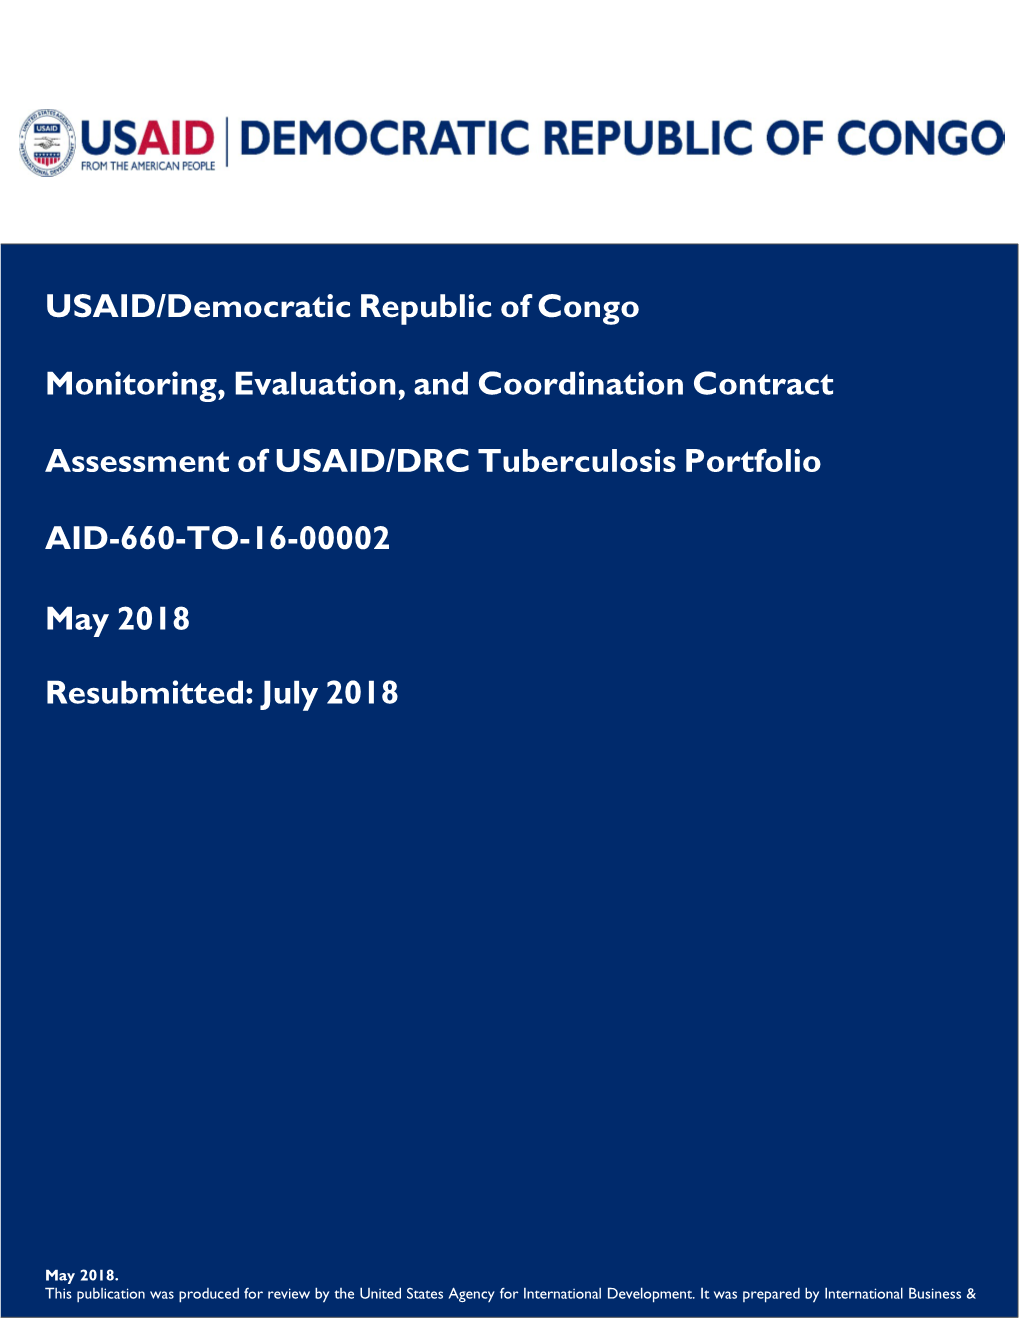 USAID/Democratic Republic of Congo | Monitoring, Evaluation, And